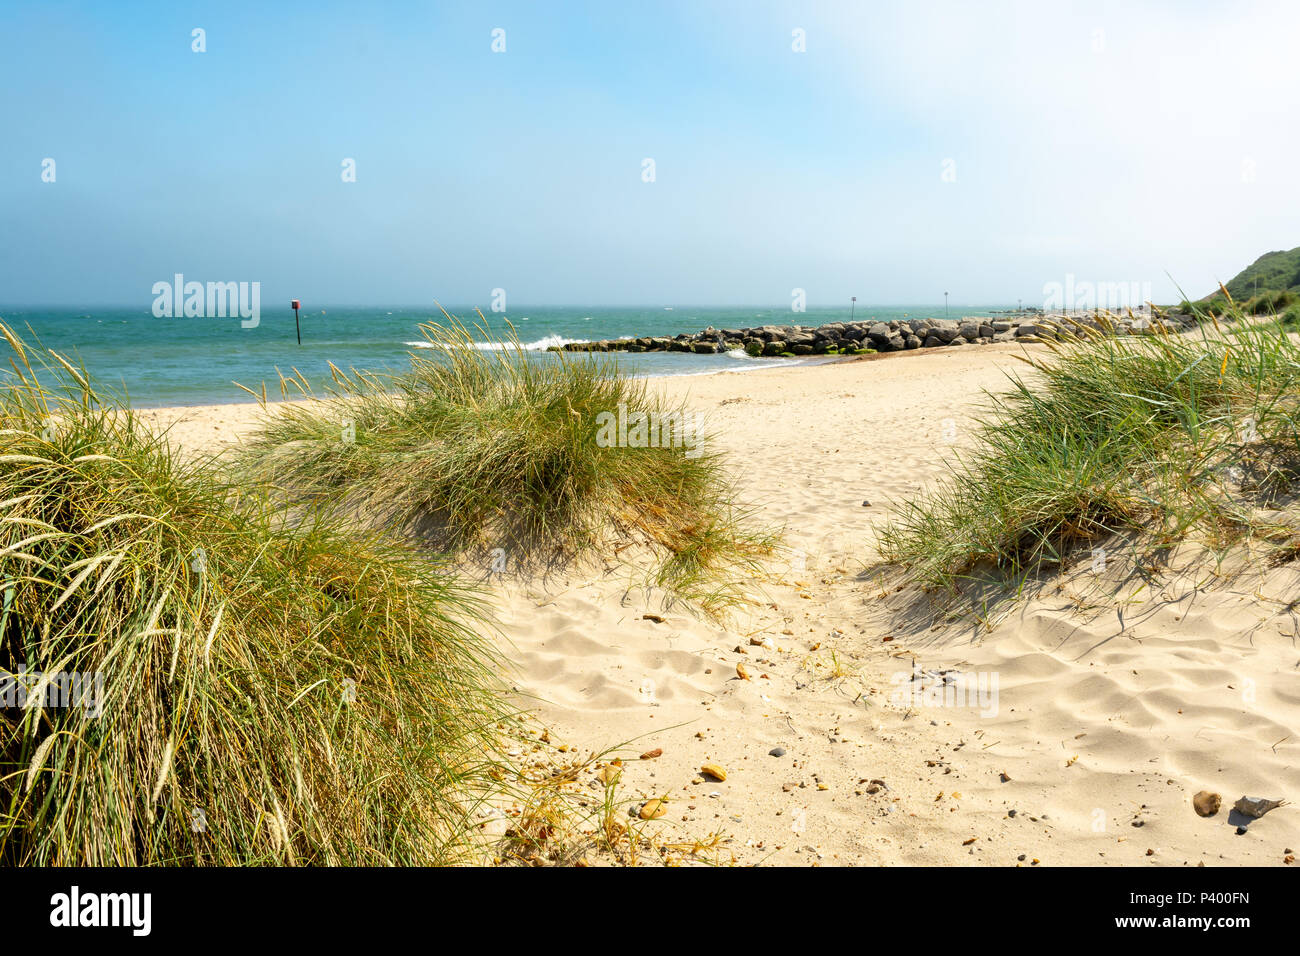 Sand dunes and beach grass scenery at Hengistbury Head, Christchurch, Dorset, UK Stock Photo